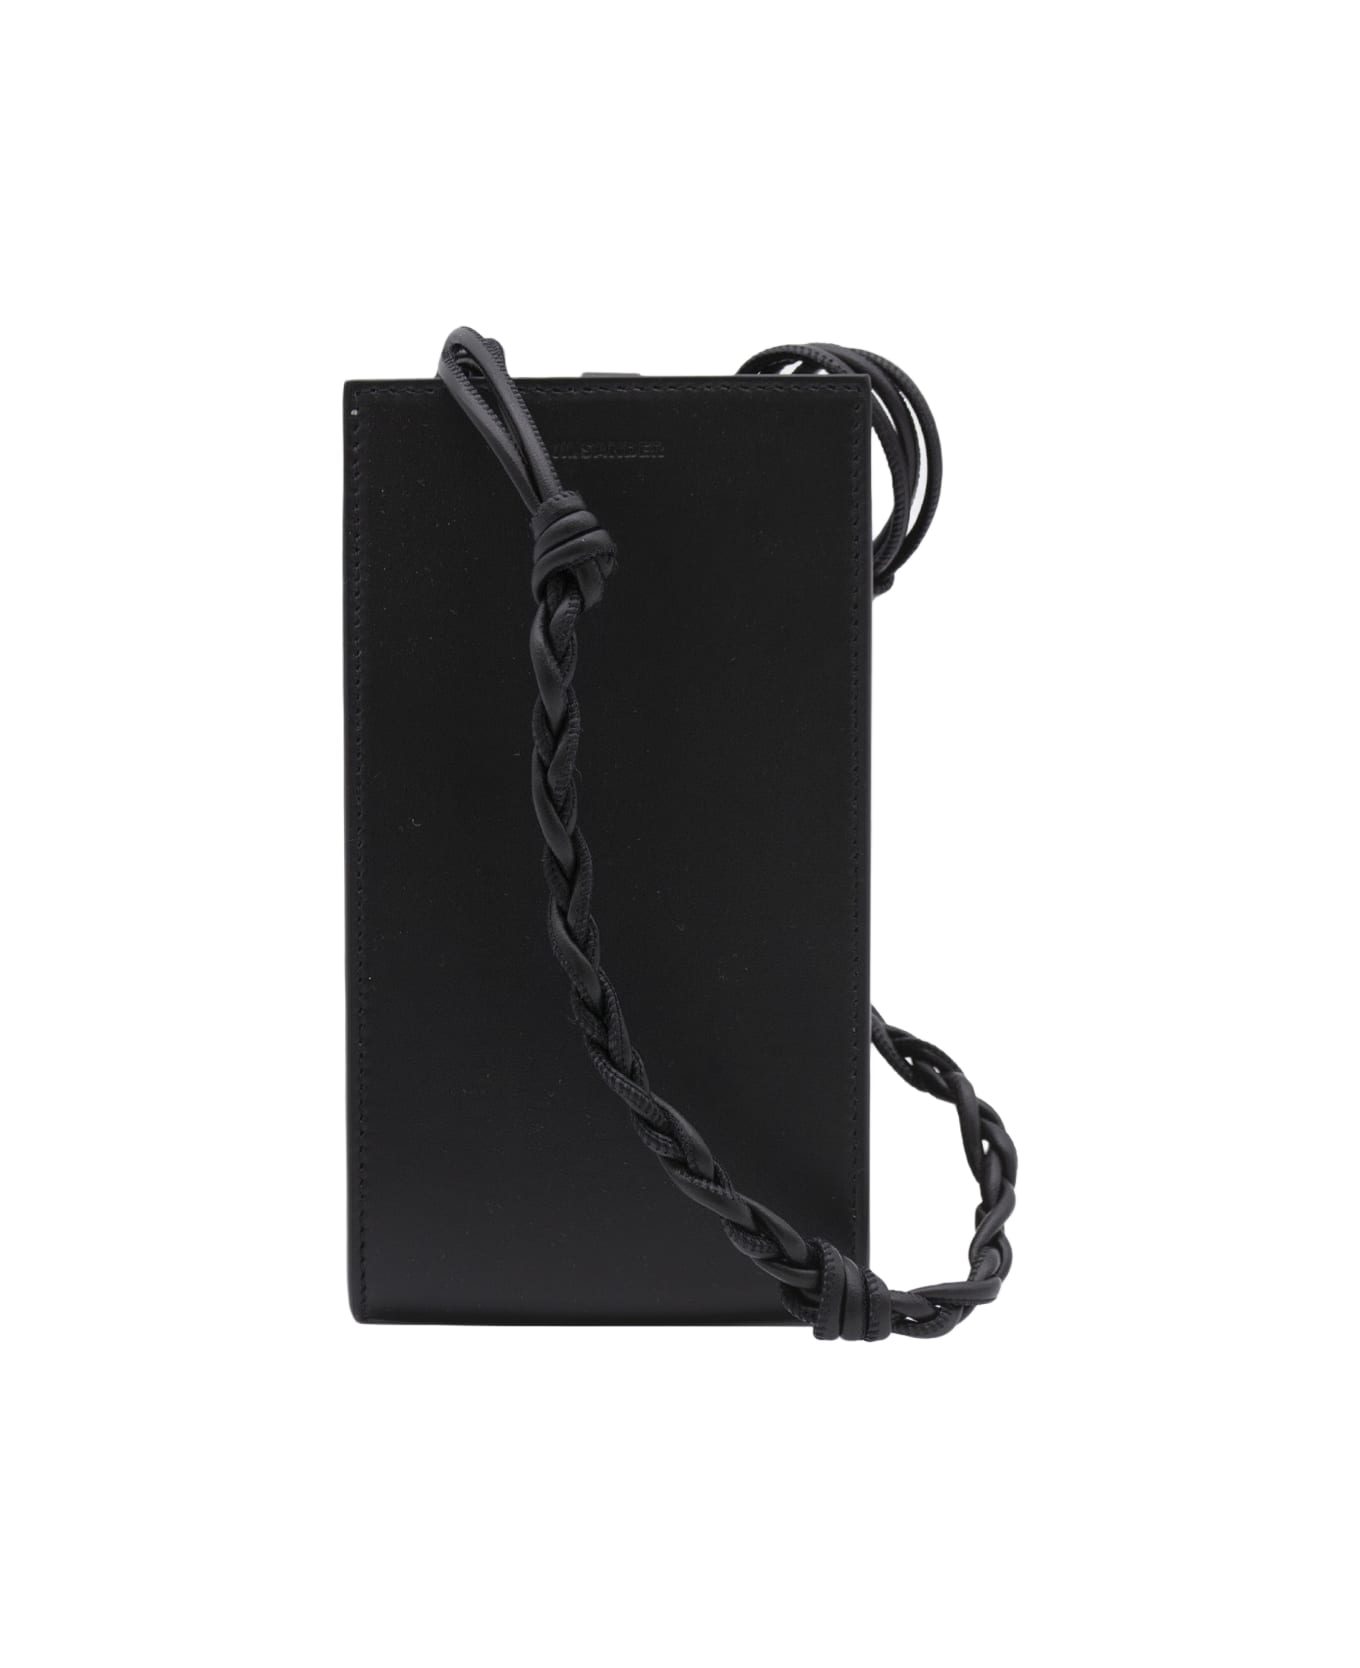 Jil Sander Black Leather Tangle Phone Case Crossbody Bag - Black ショルダーバッグ